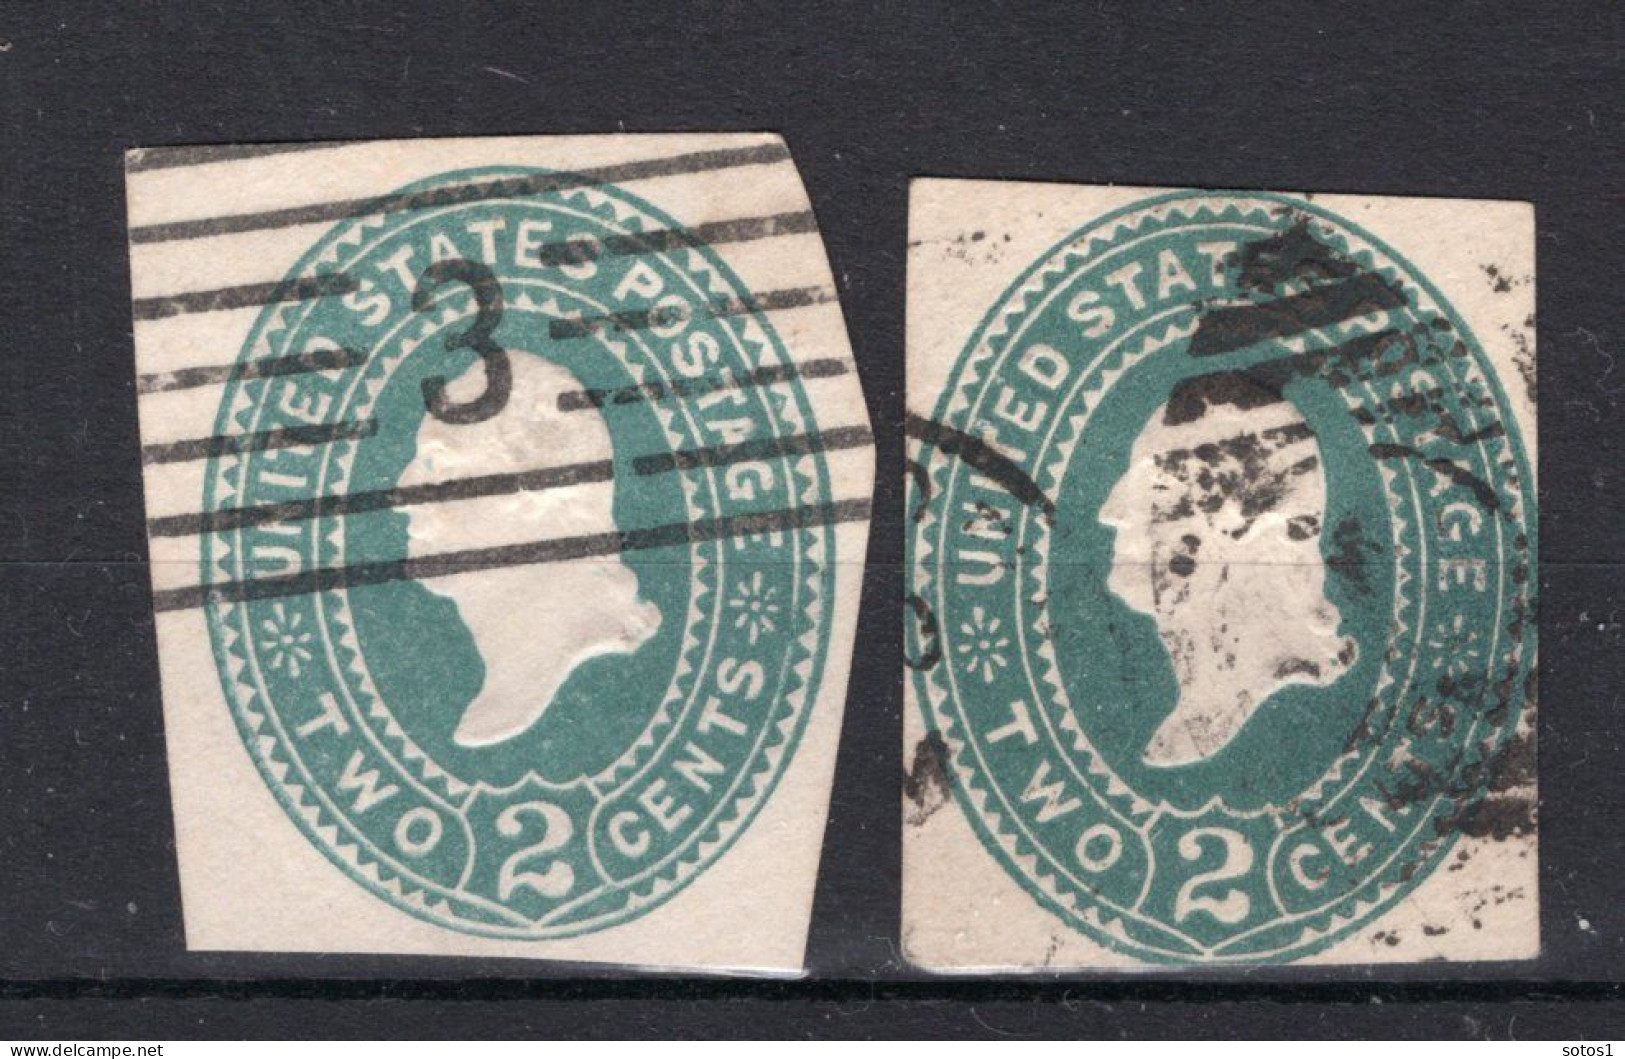 UNITED STATES Stamped Enveloppes 2 Cent 1887-1894 - ...-1900